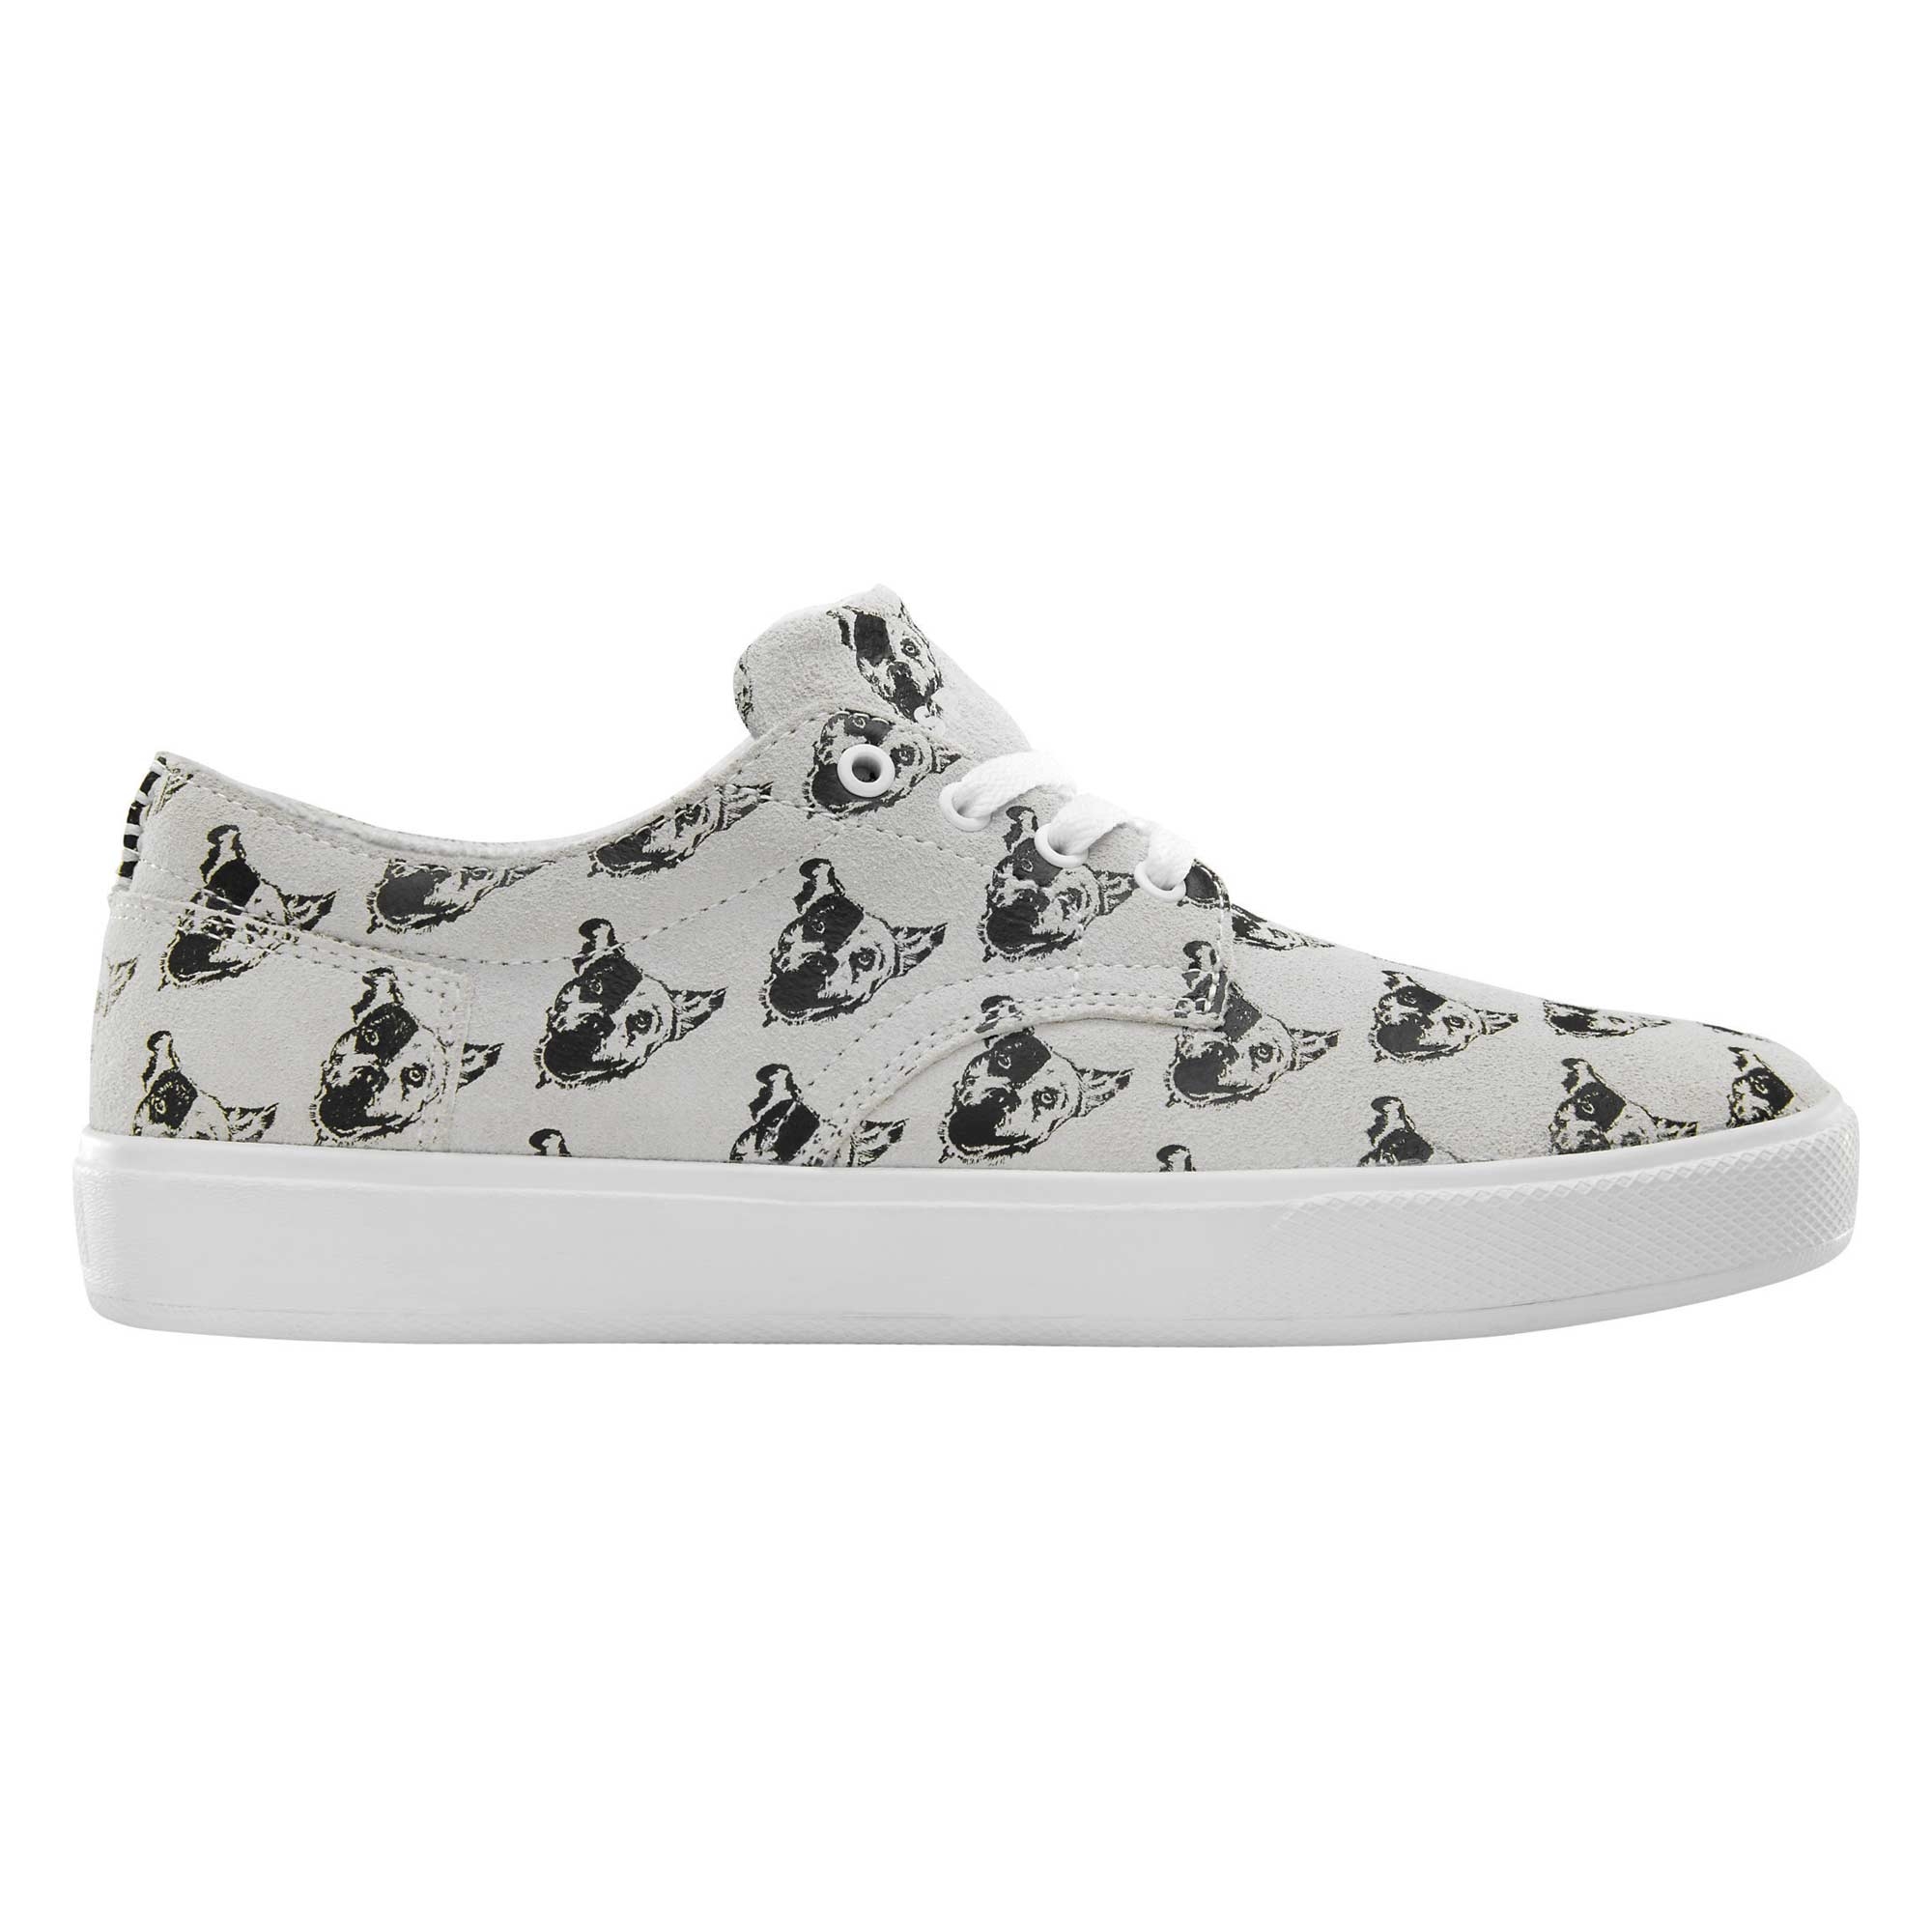 EMERICA Shoe SPANKY G6 whi/bla white/black